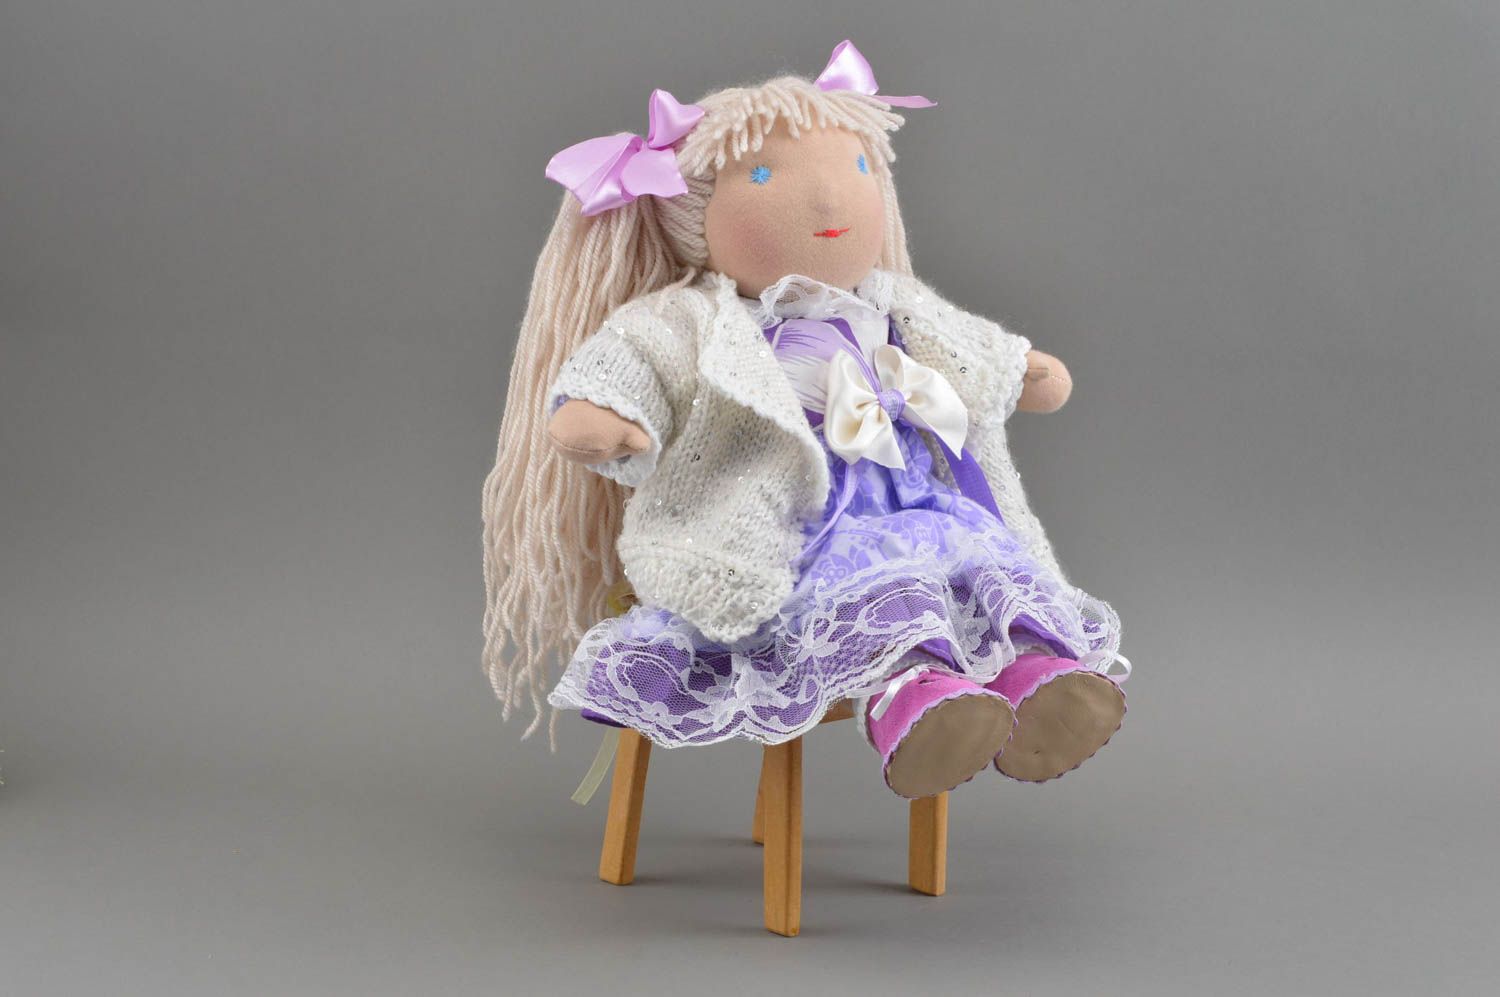 Handmade soft doll nursery decor ideas fabric stuffed toy for children photo 4